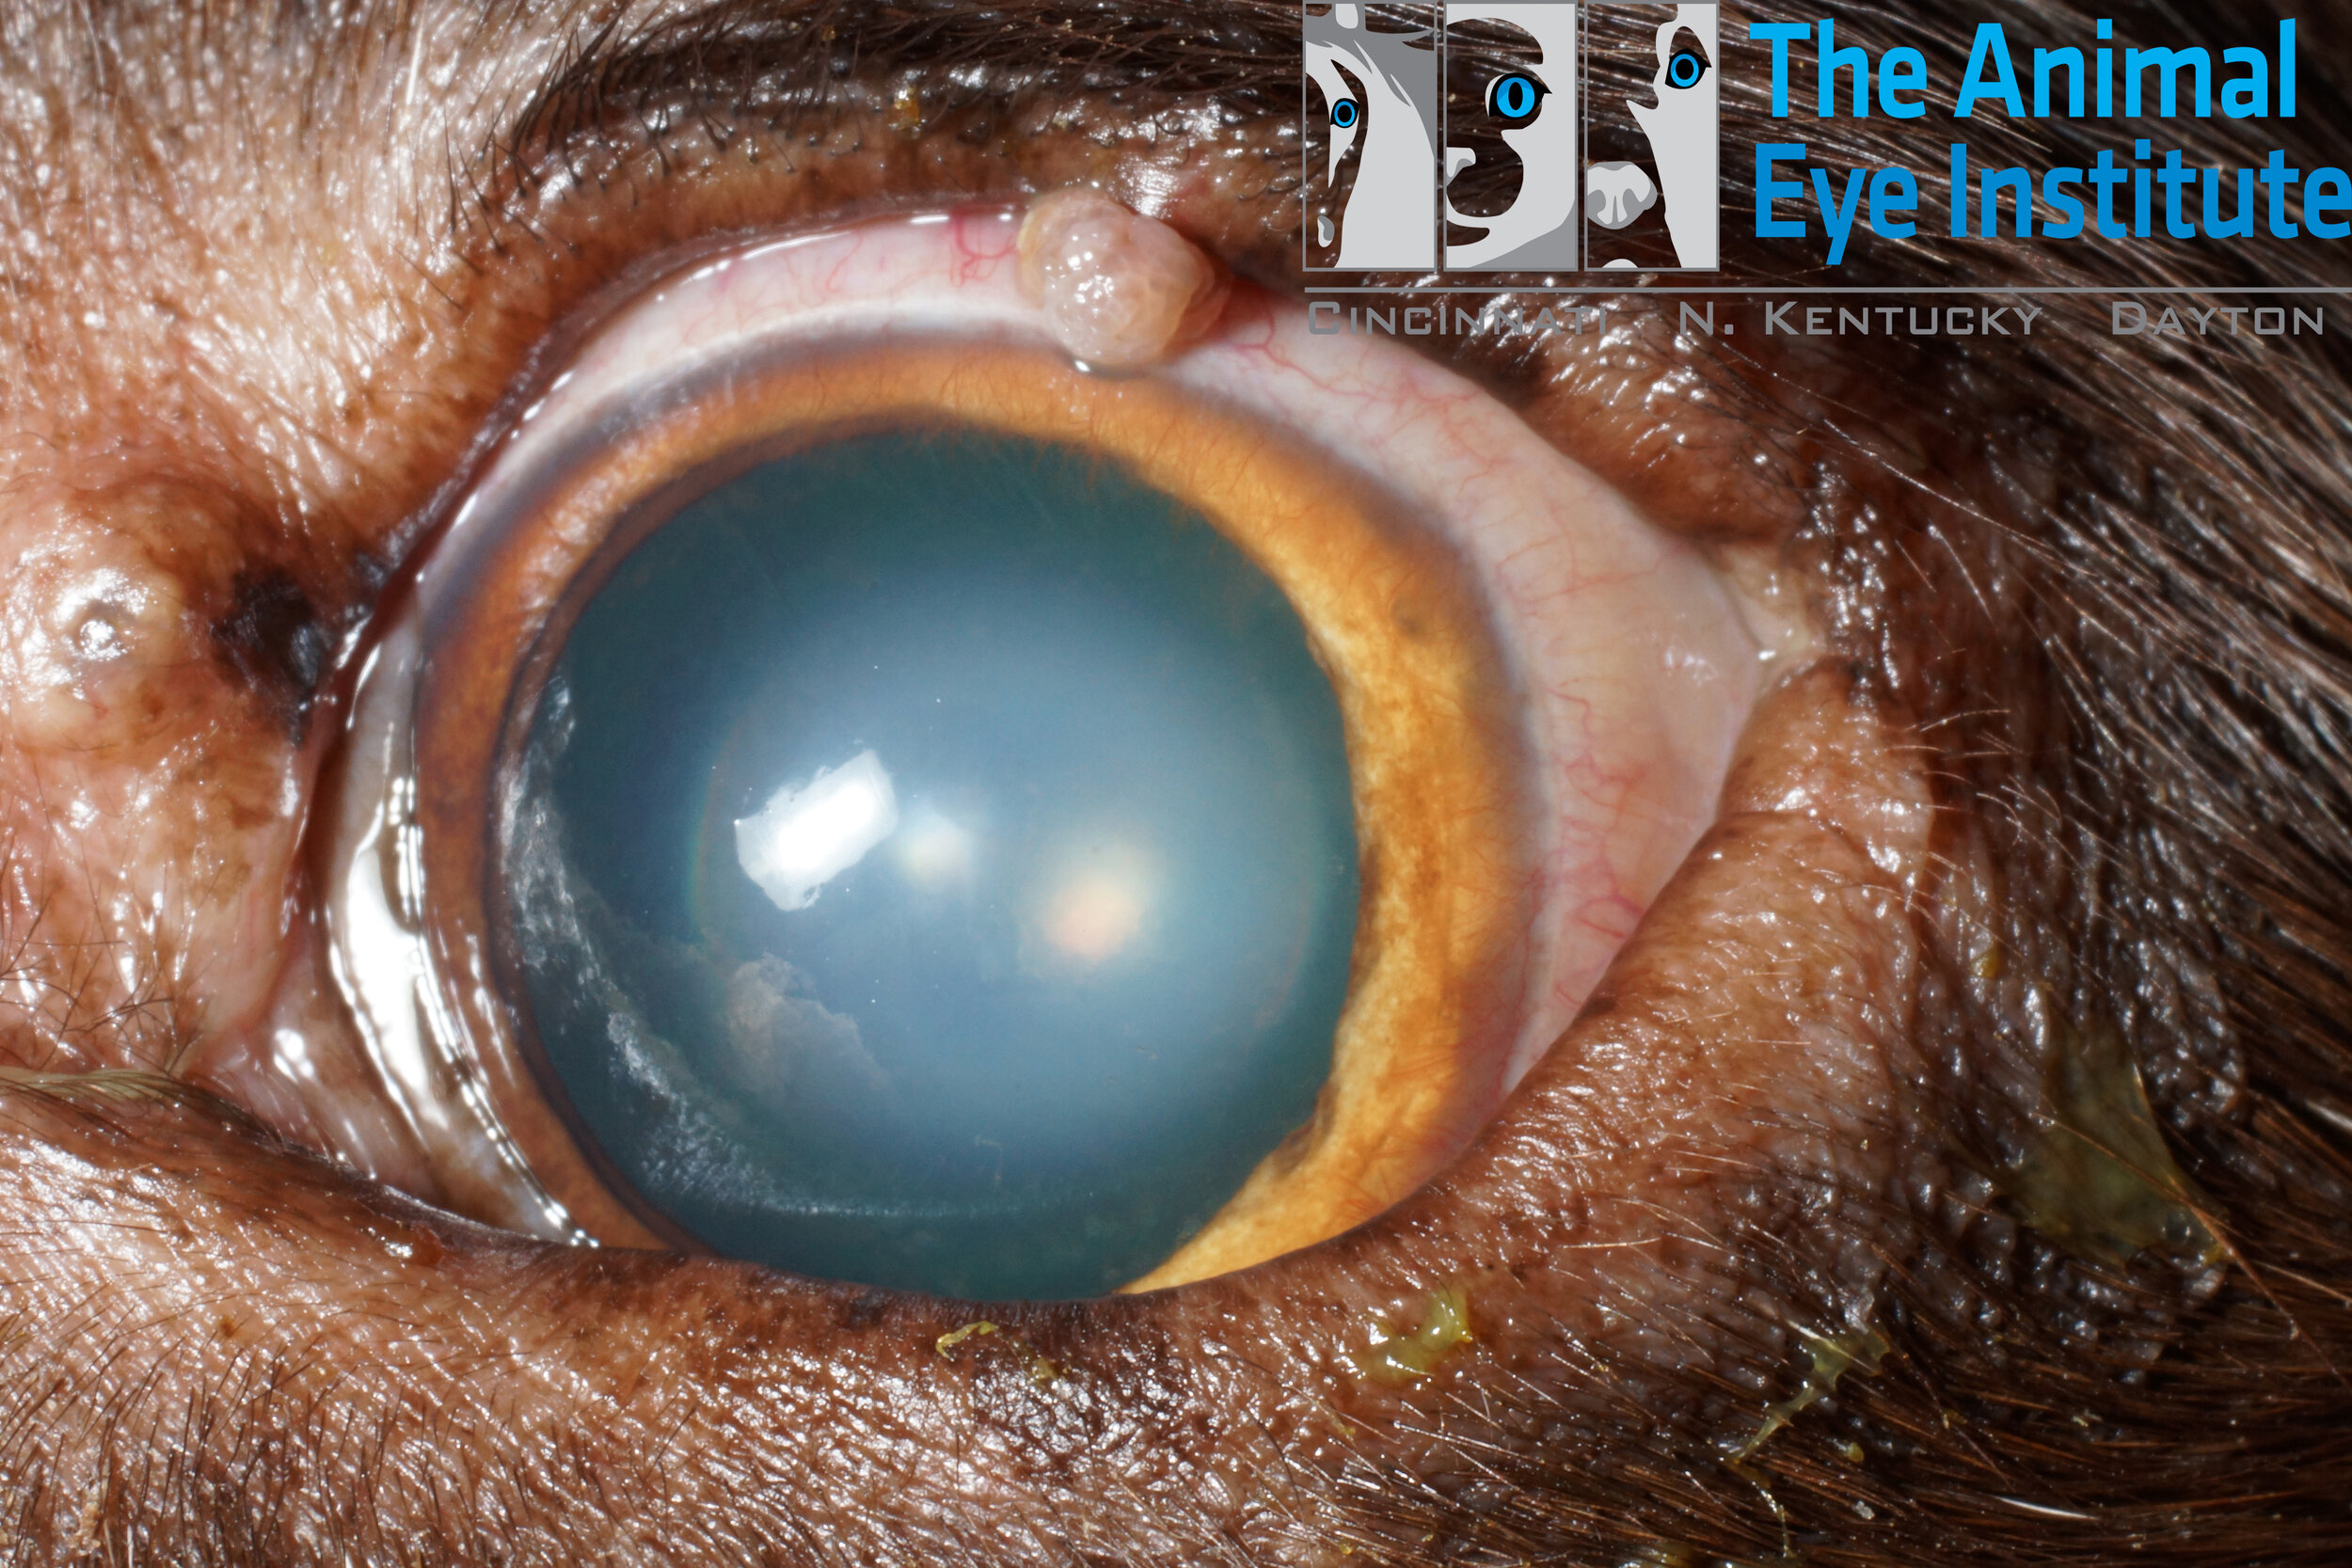 K9 Eyelid Mass Papilloma Nuclear Sclerosis Yukon Baysor 10.11.13 copy.jpg